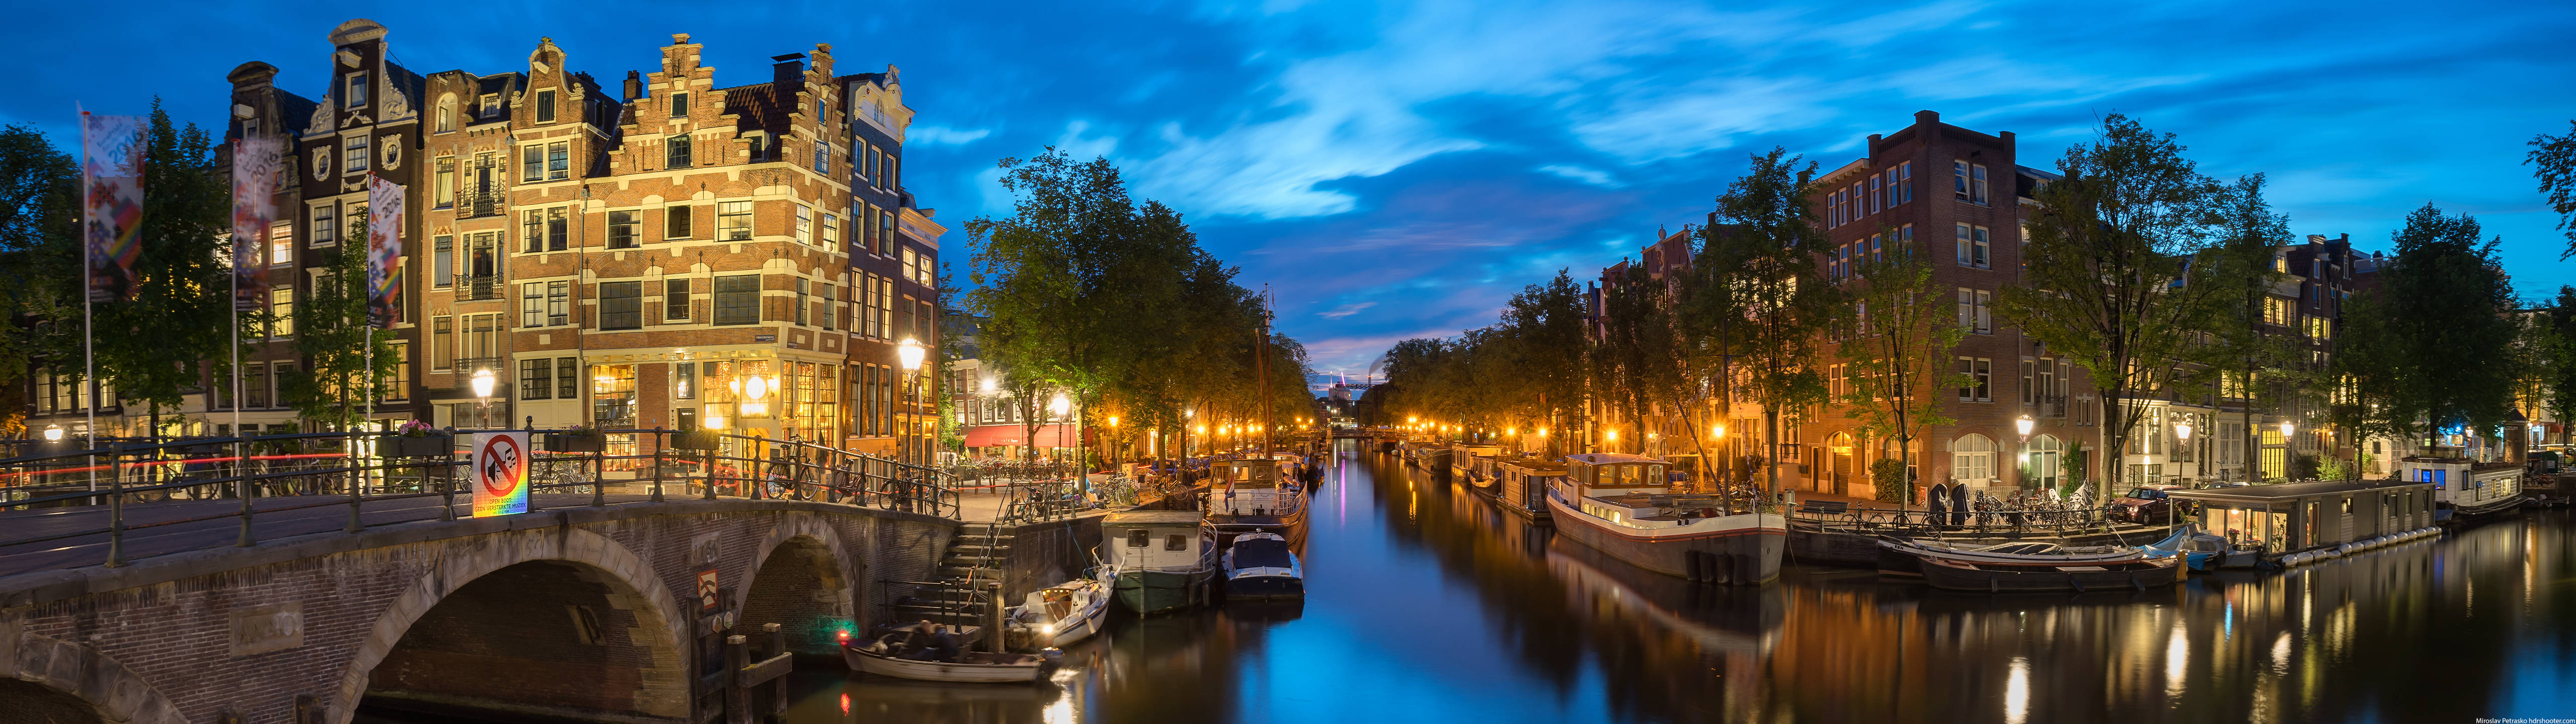 Canals Of Amsterdam 4k Ultra Widescreen